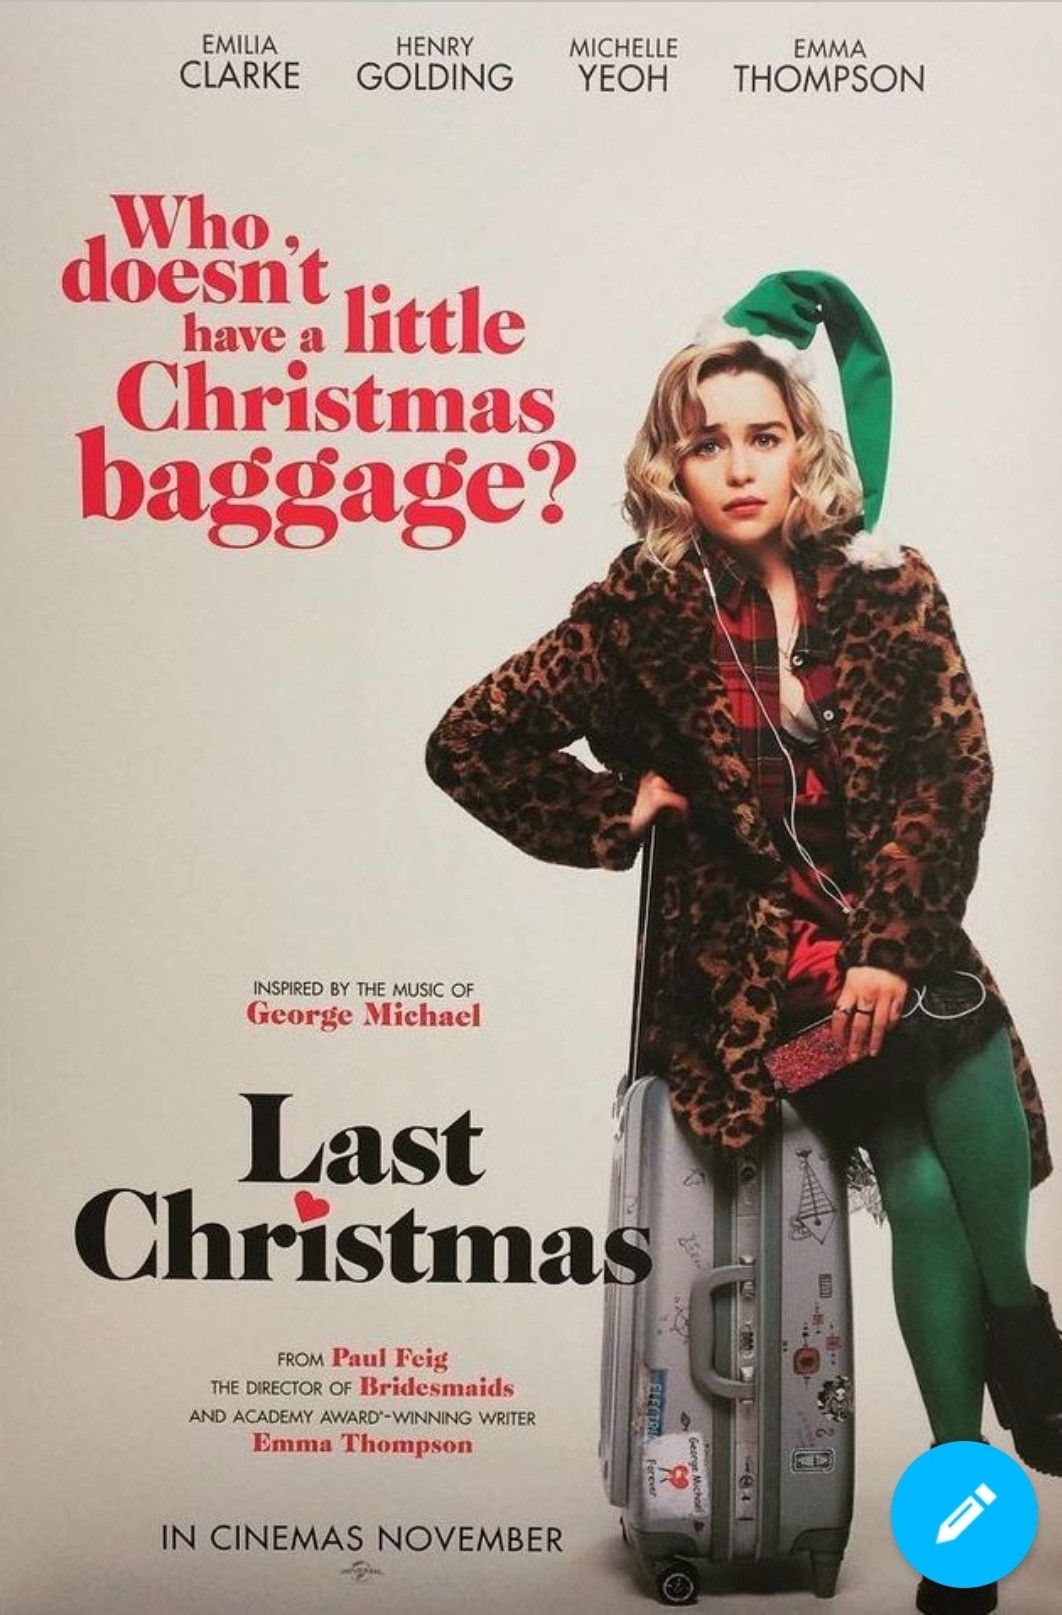 Emilia Clarke Last Christmas Movie Wallpapers